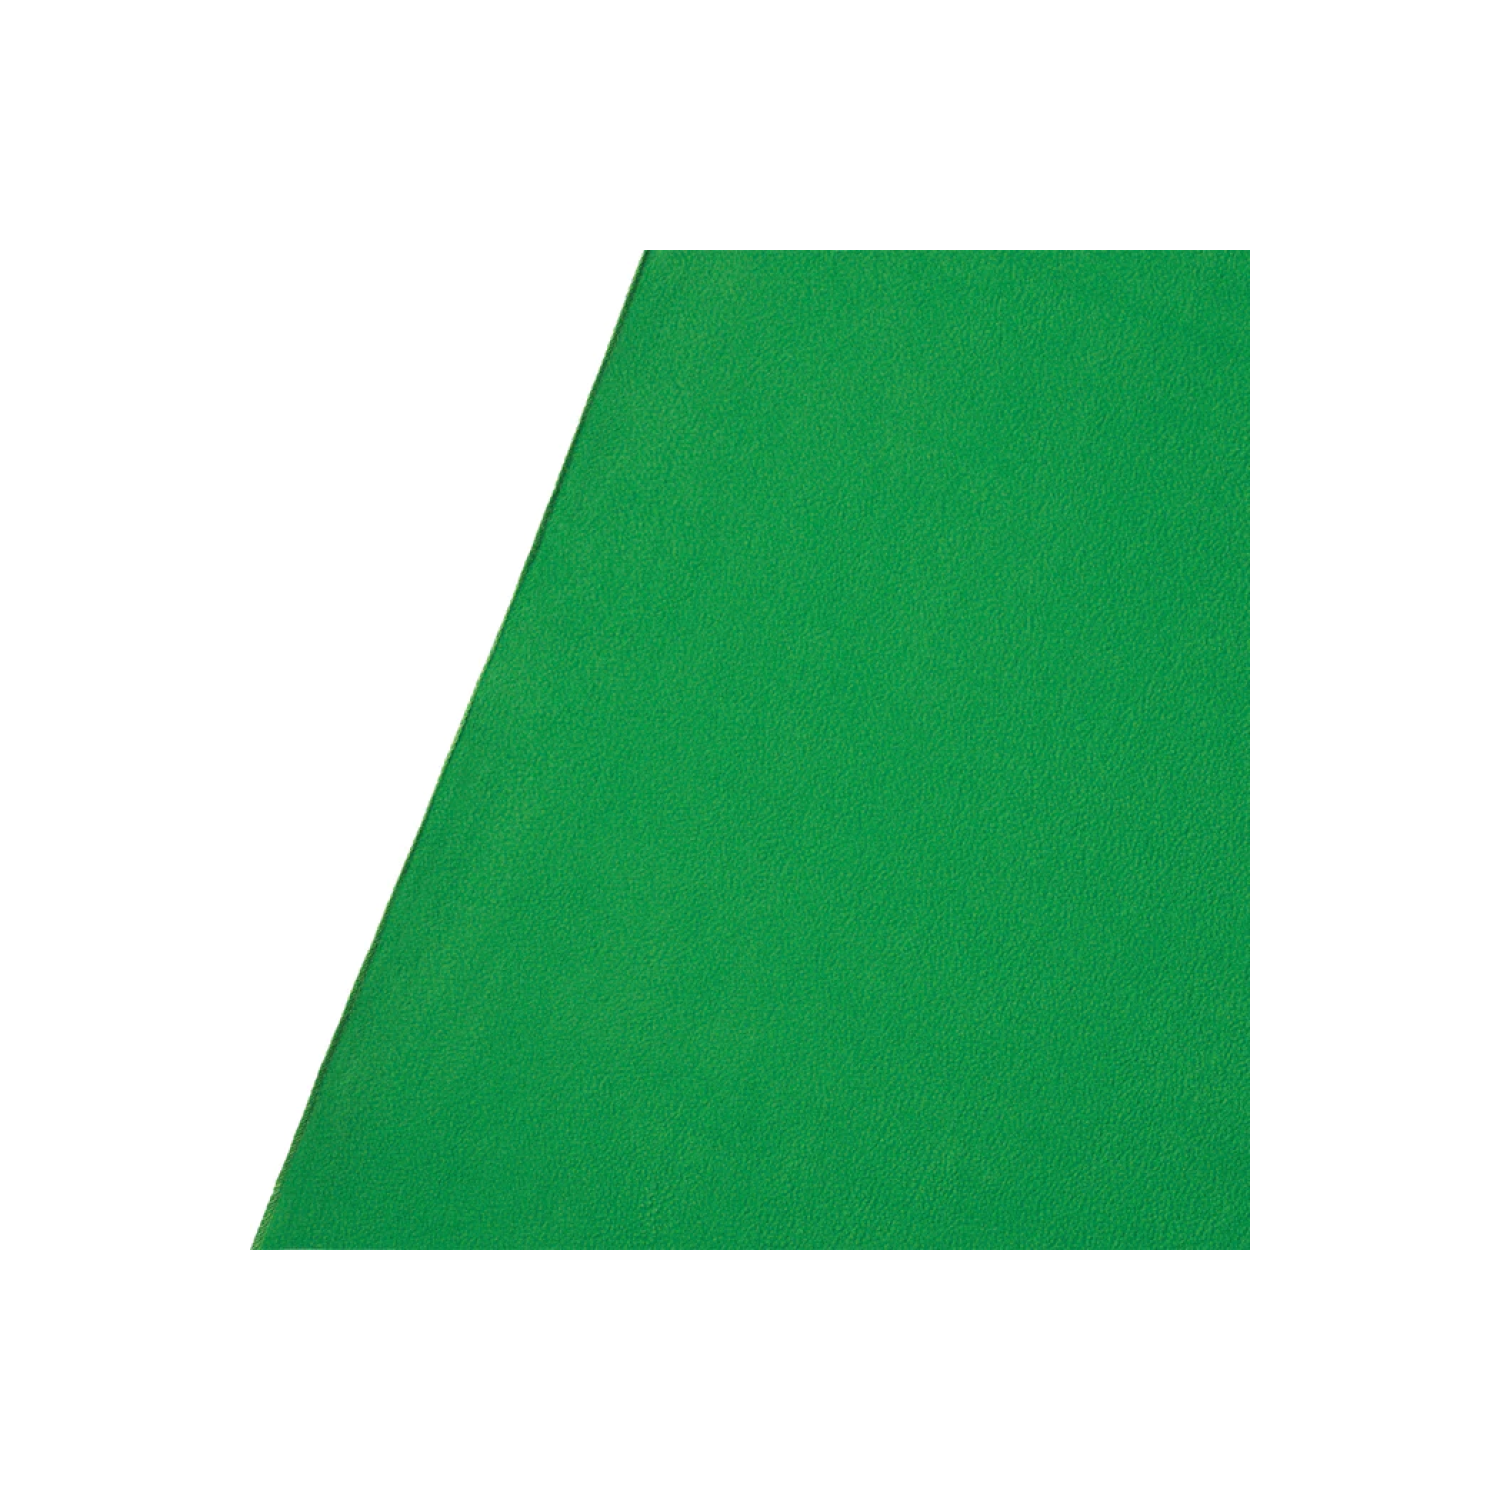 Westcott Wrinkle-Resistant Backdrop - Chroma-Key Green (9' x 10')